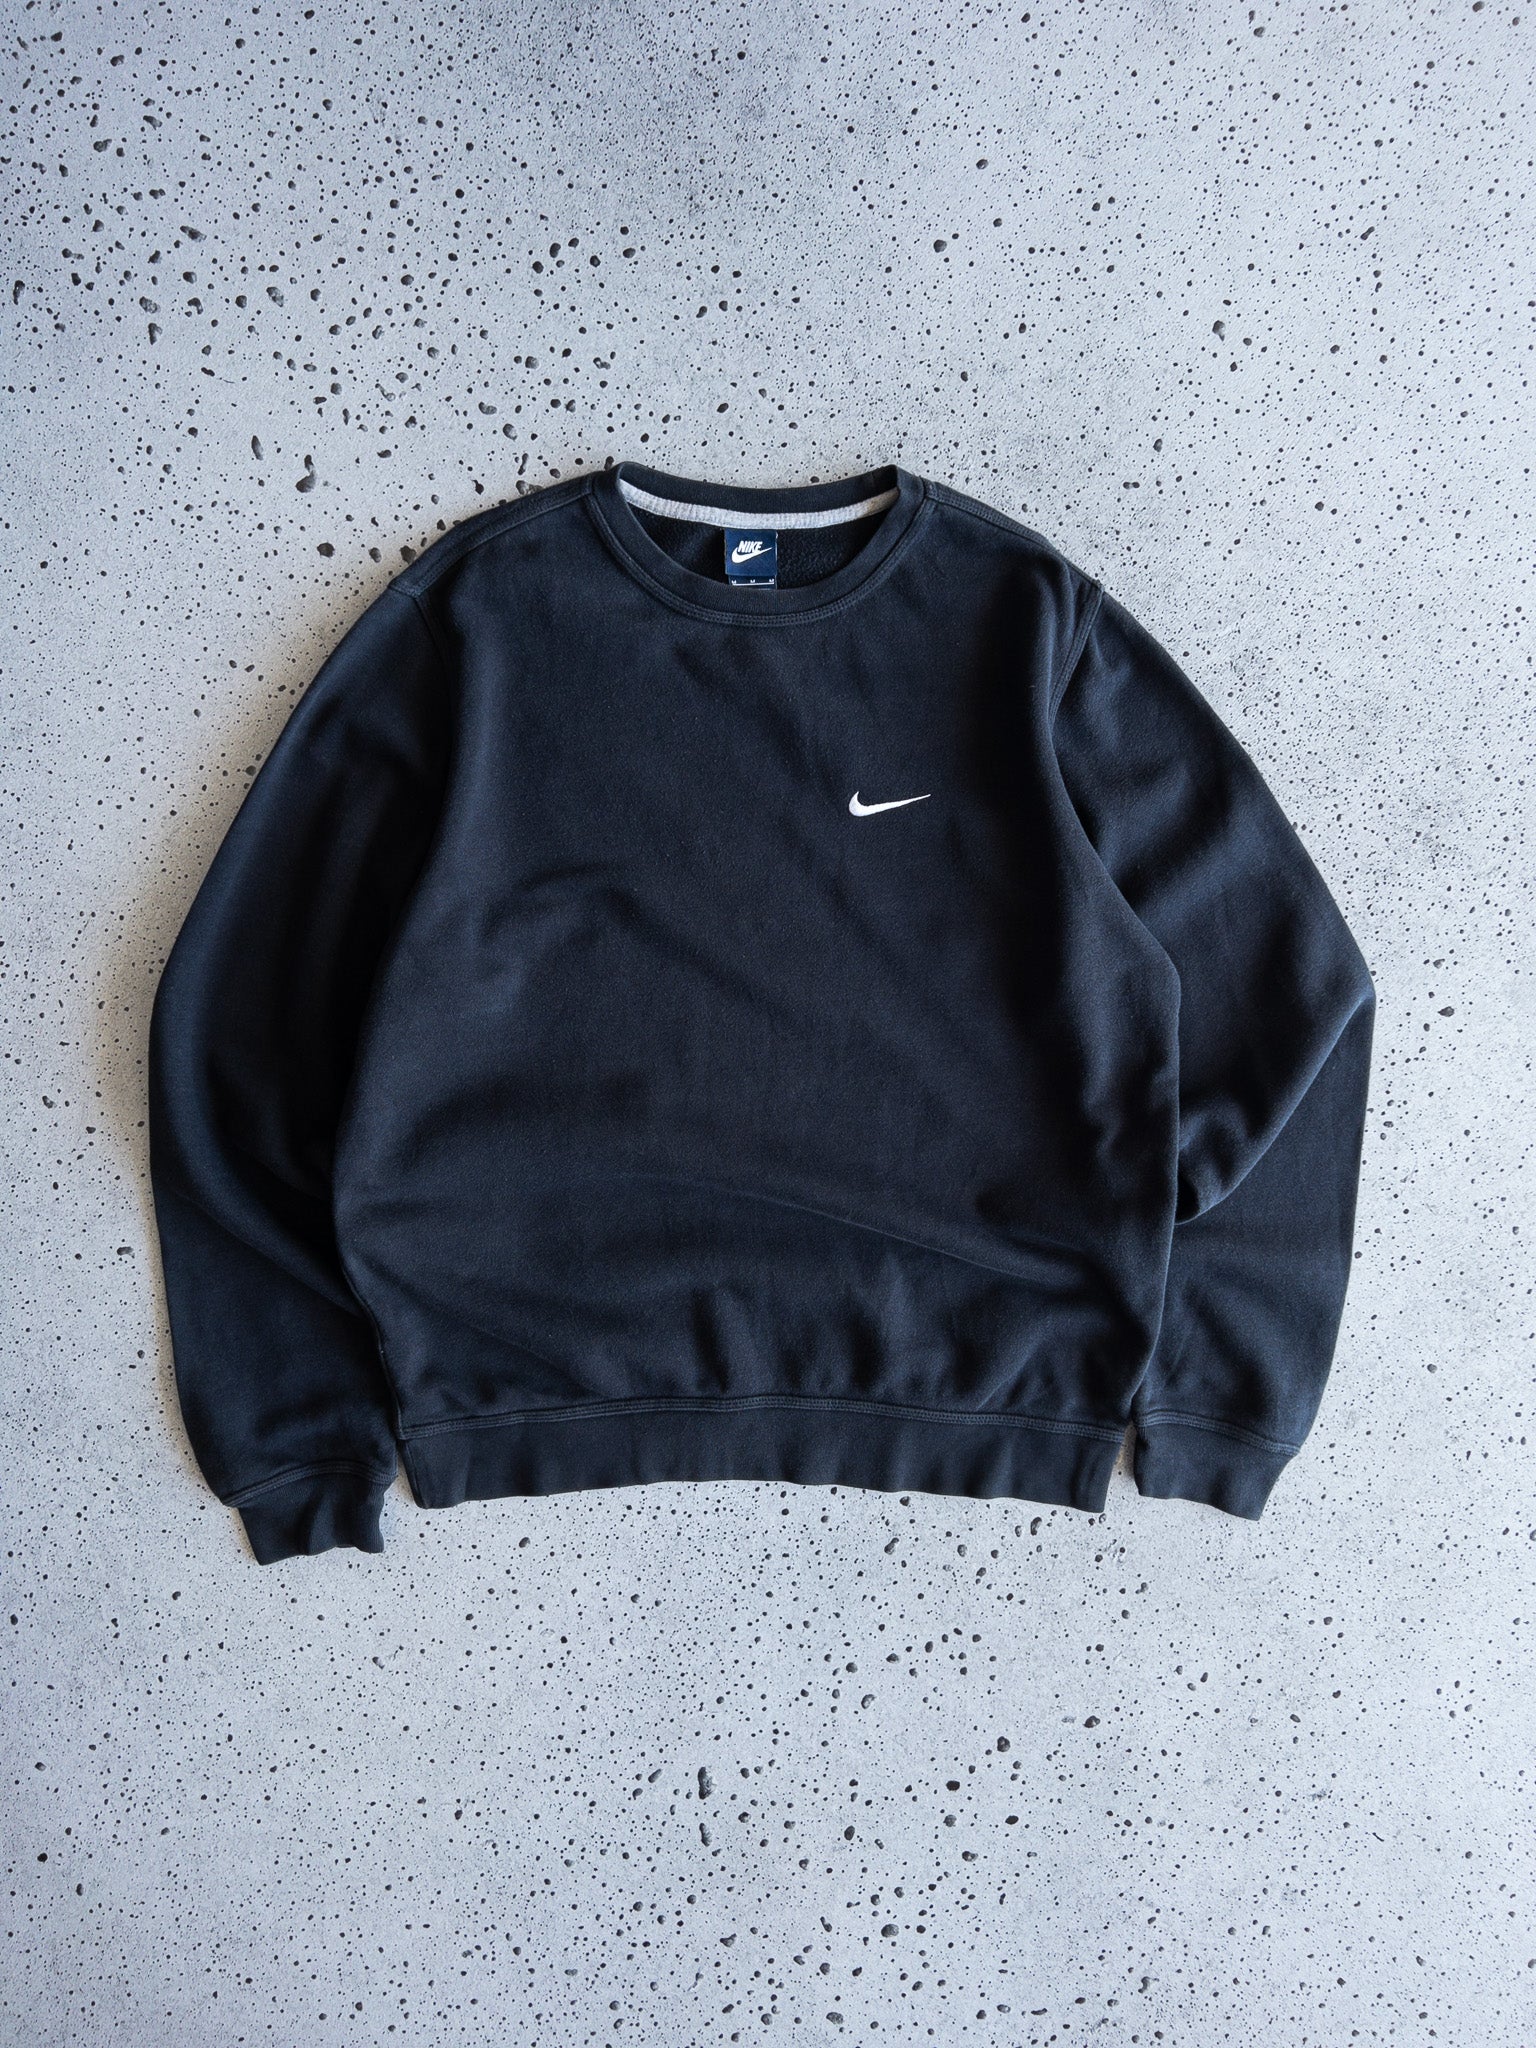 Vintage Nike Sweatshirt (M)